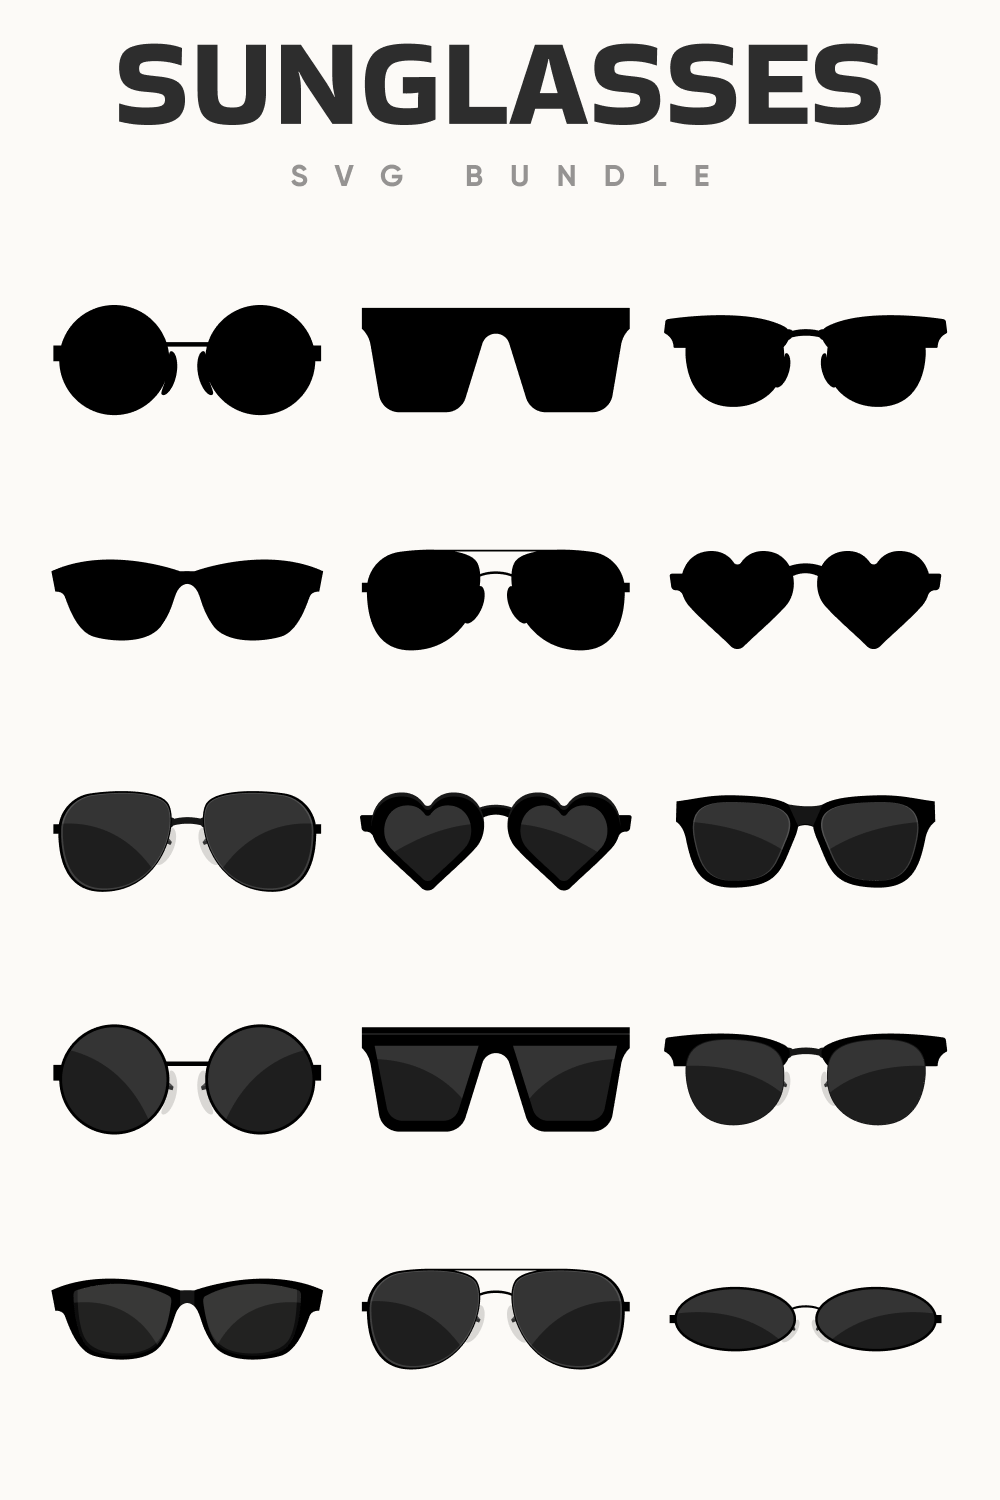 Diverse of the black sunglasses.